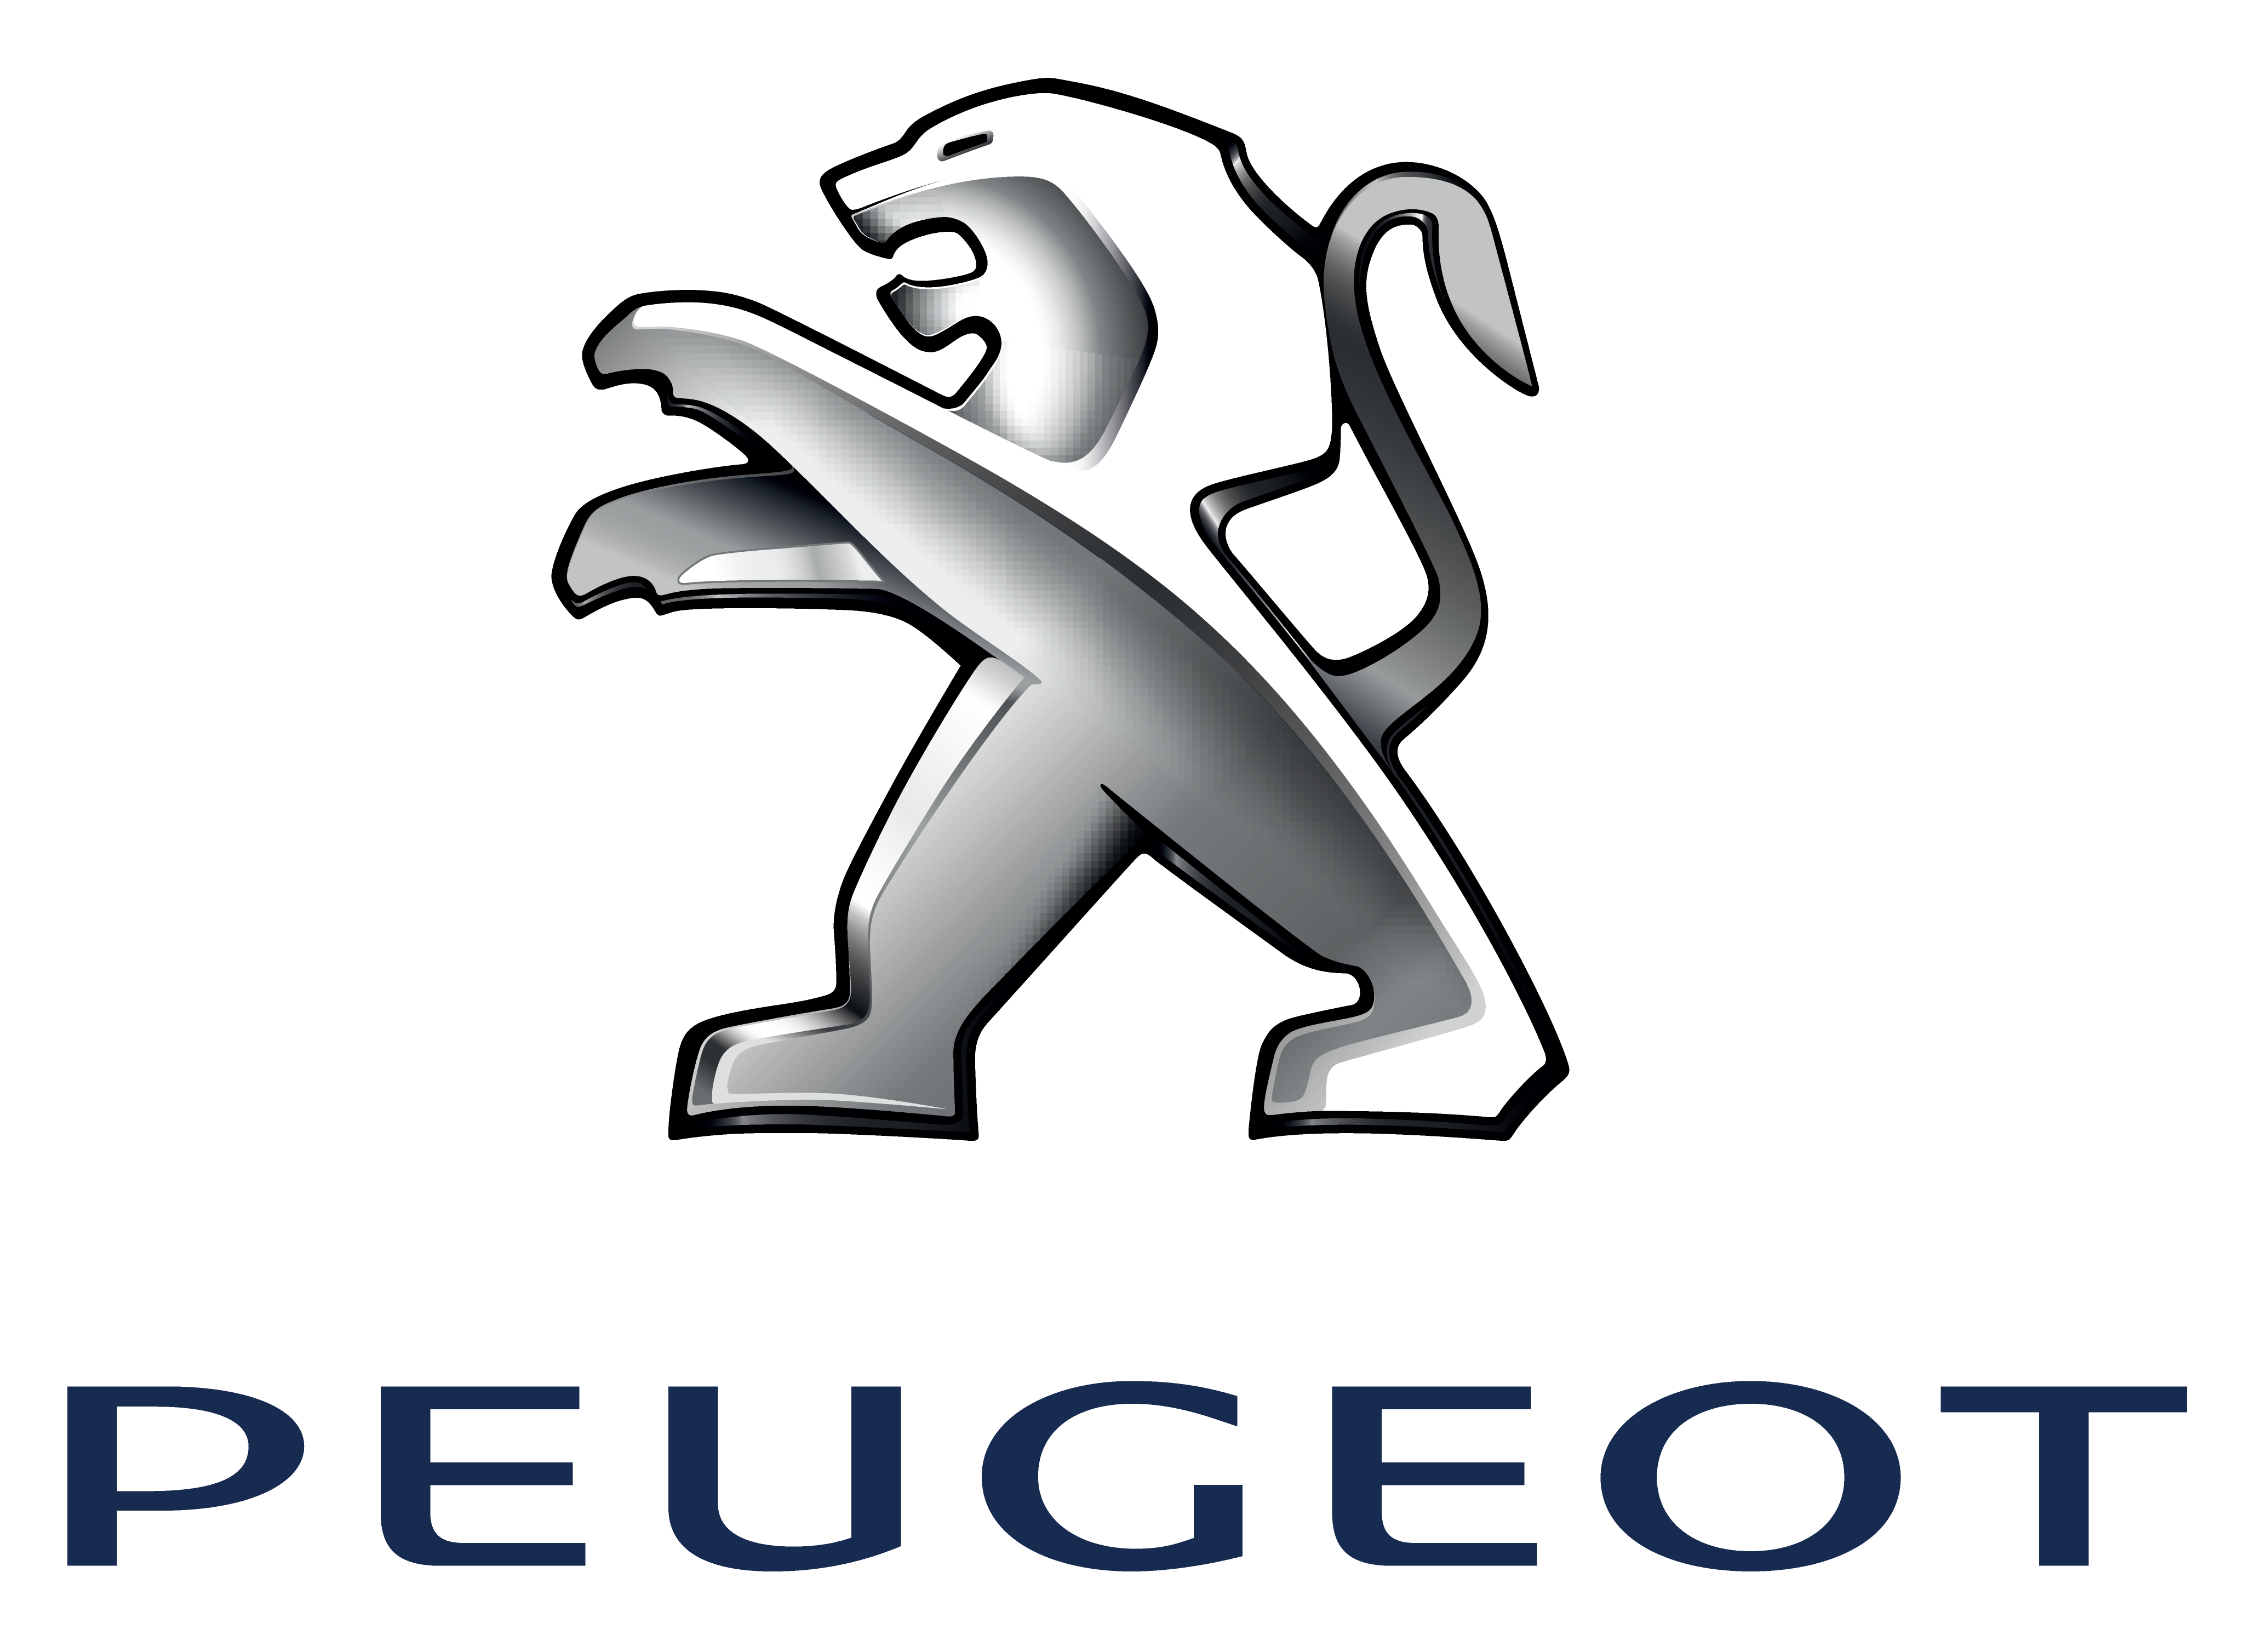 Peugeot Logo Png Download - 5